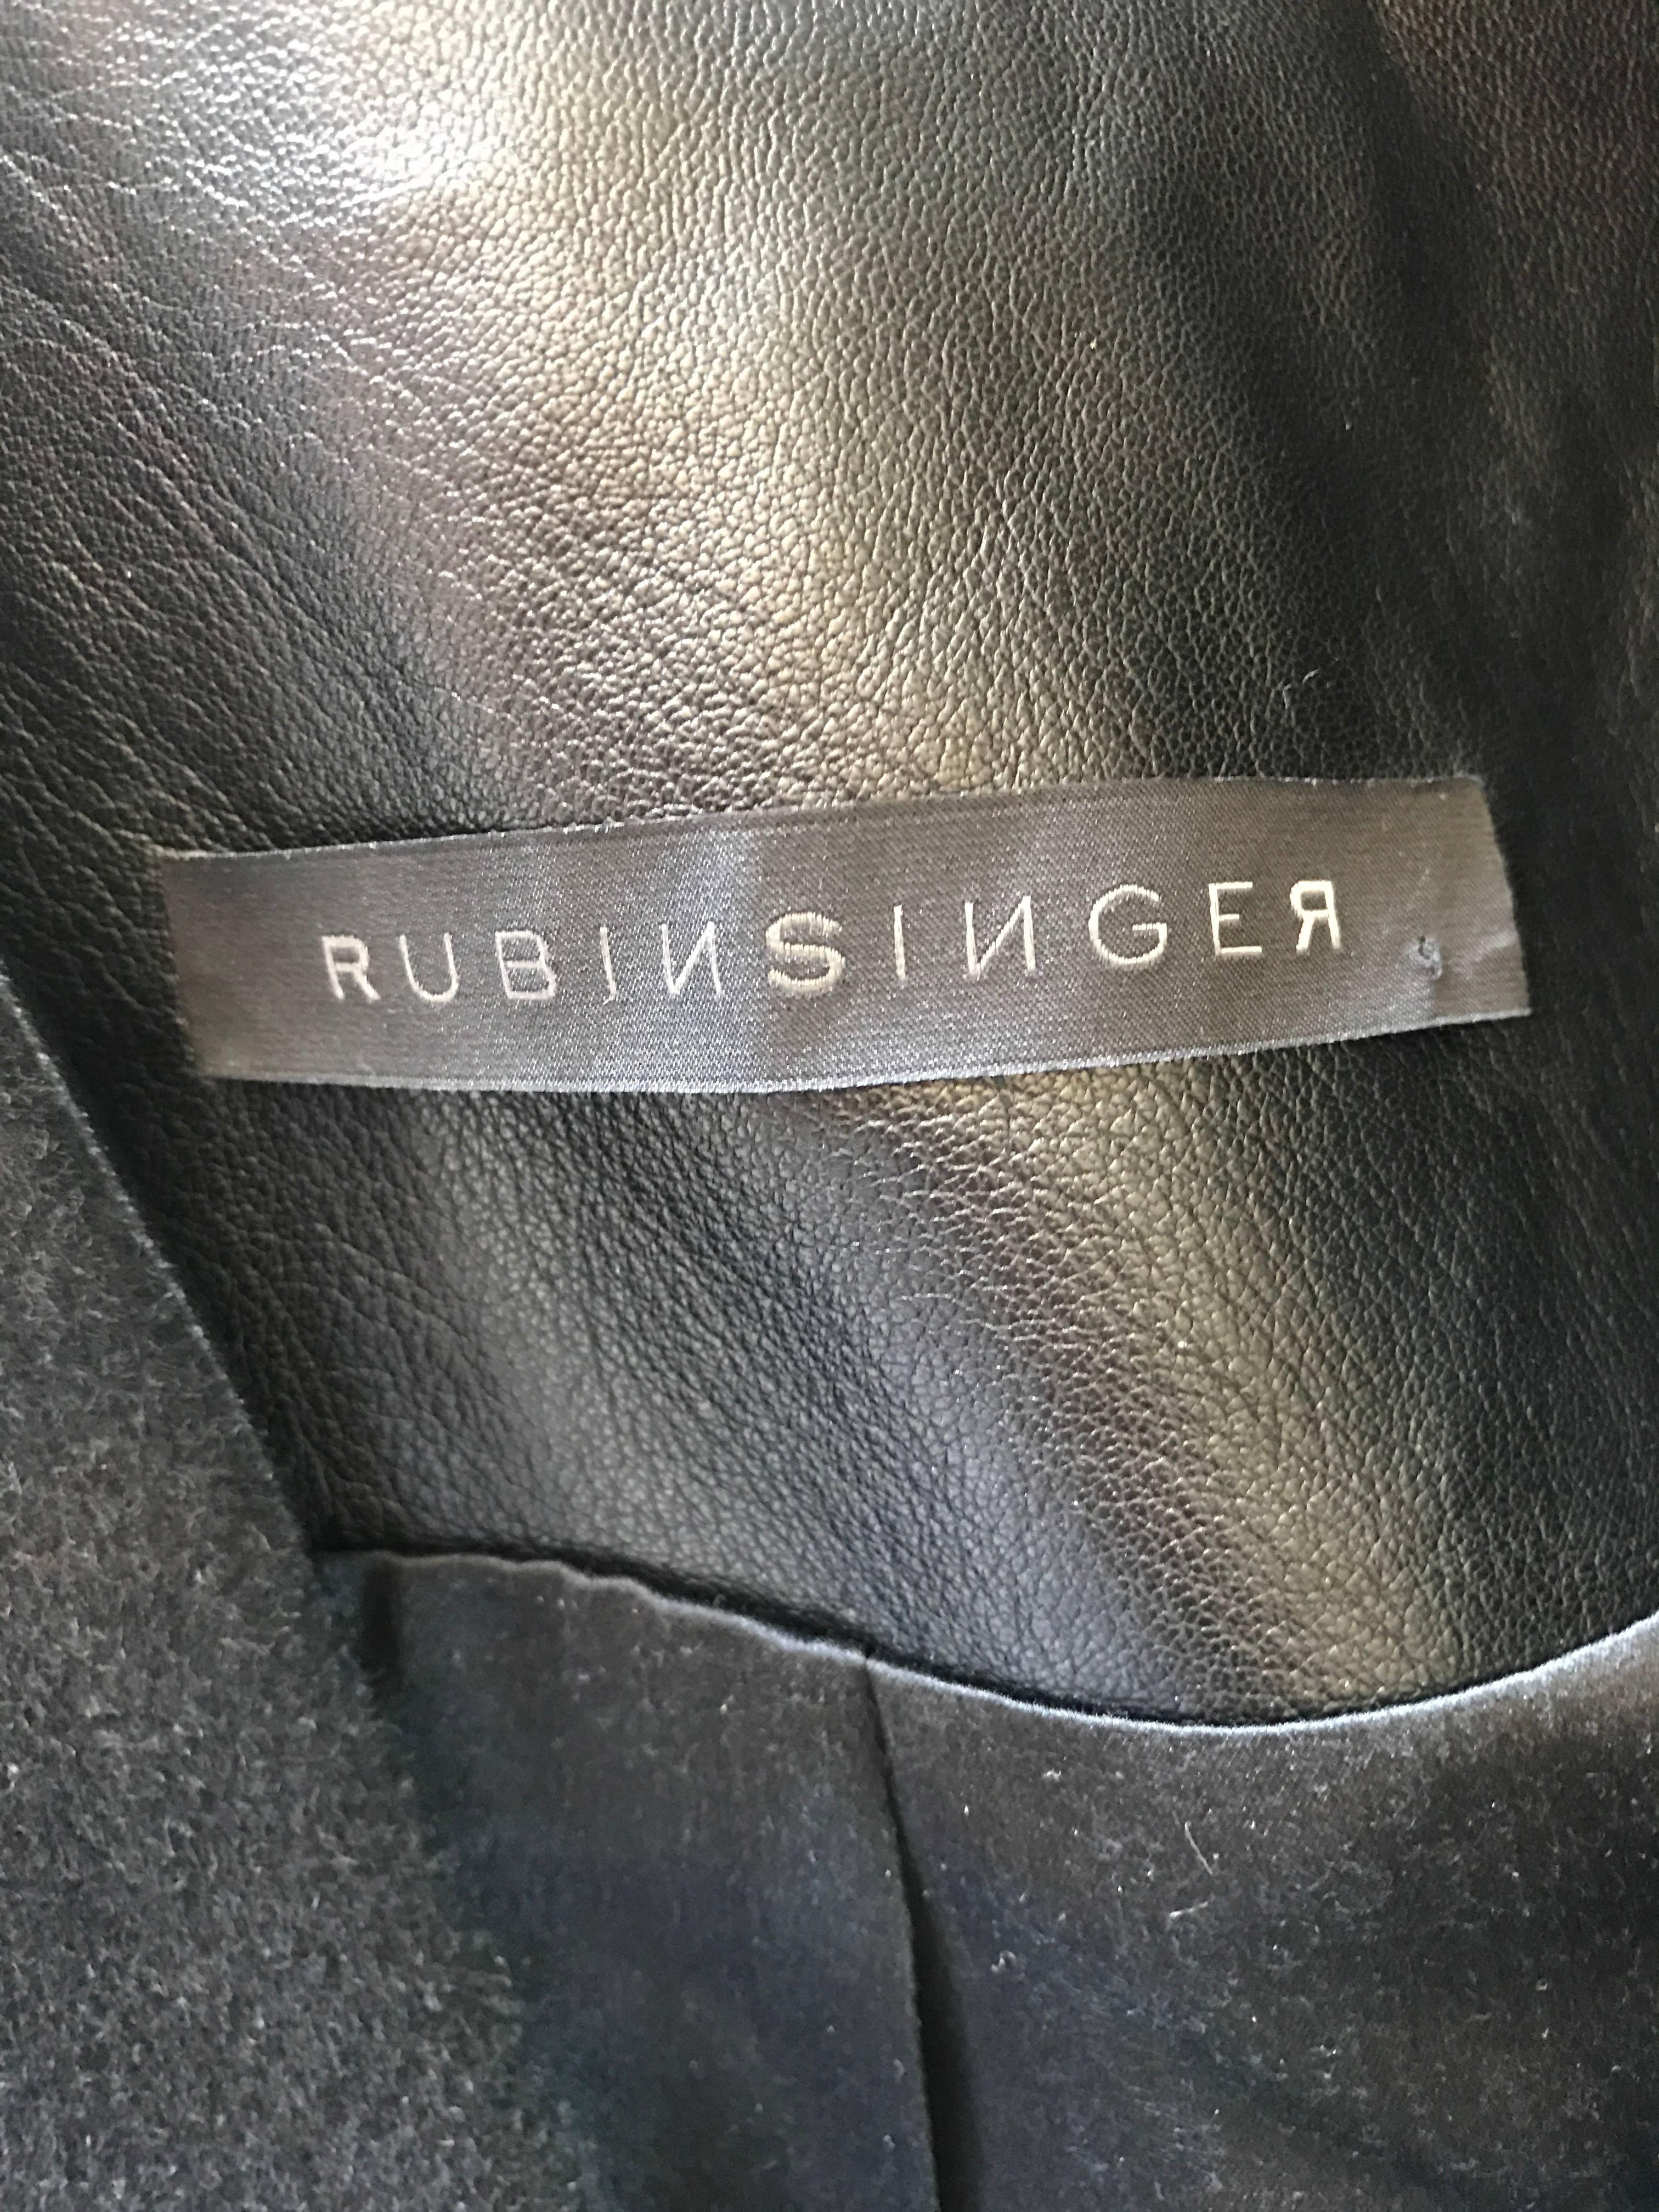 New Rubin Singer Black Cashmere + Wool + Leather Avant Garde Cropped Jacket  4